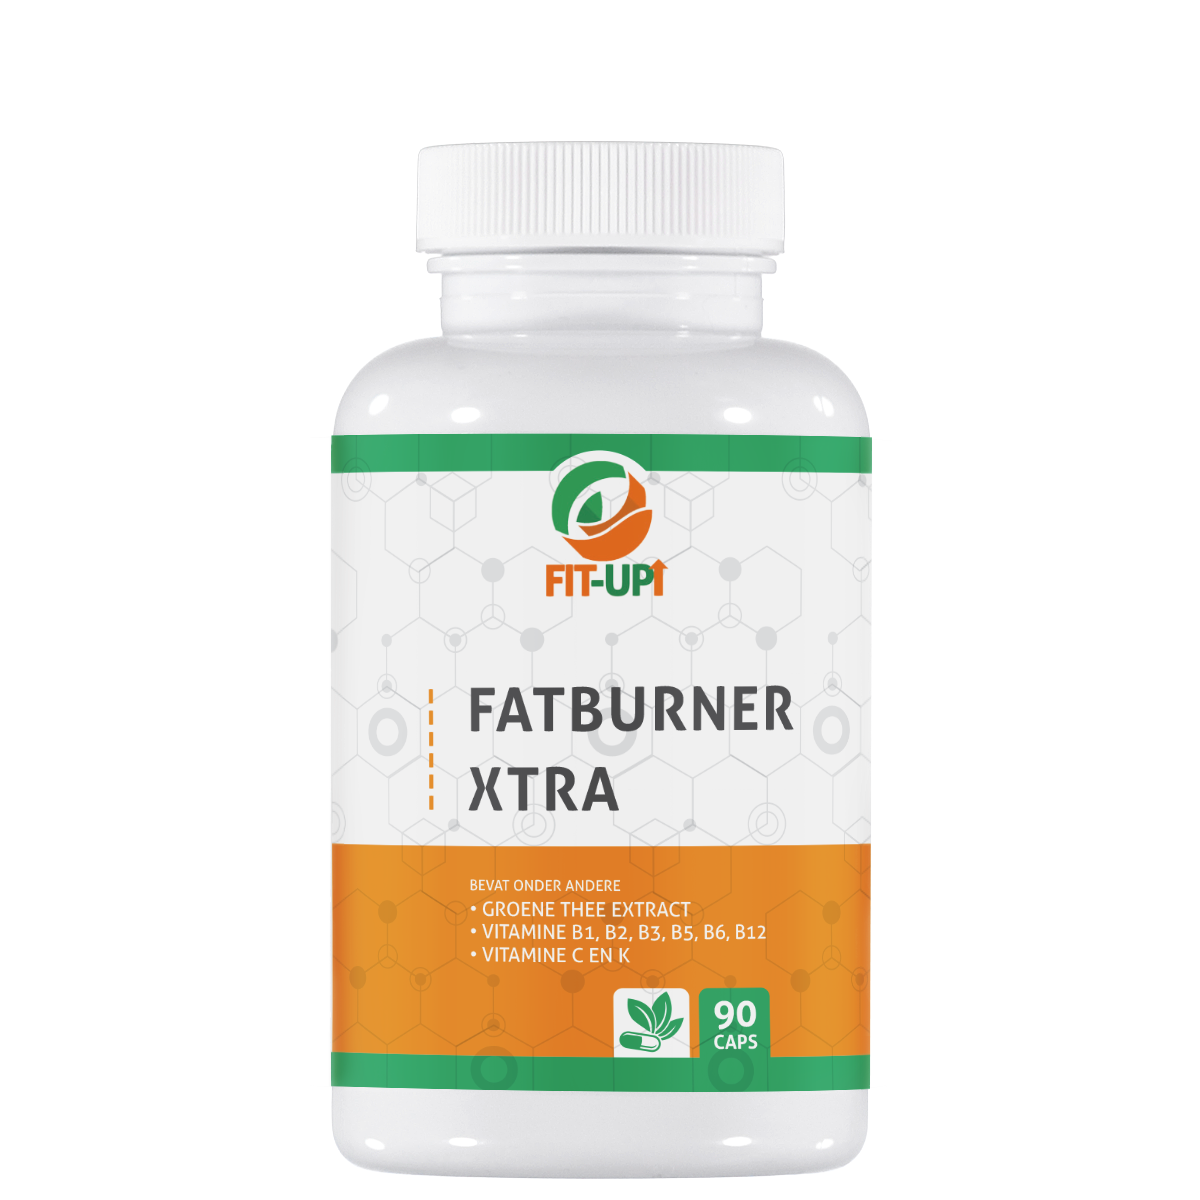 Fatburner XTRA | 90 capsules